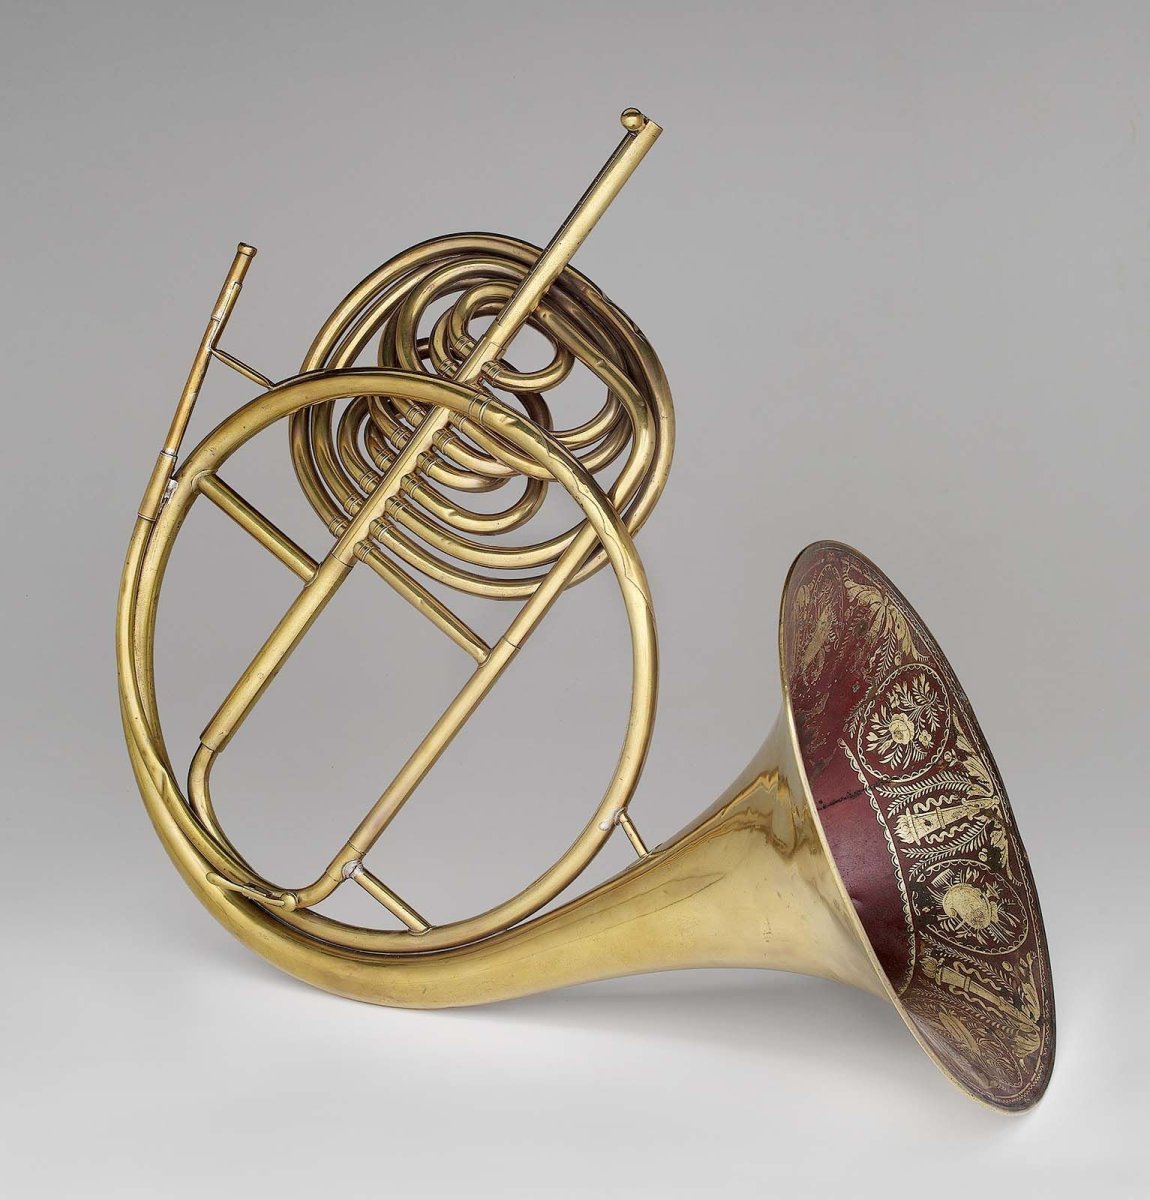 Vogel Horn музыкальный инструмент